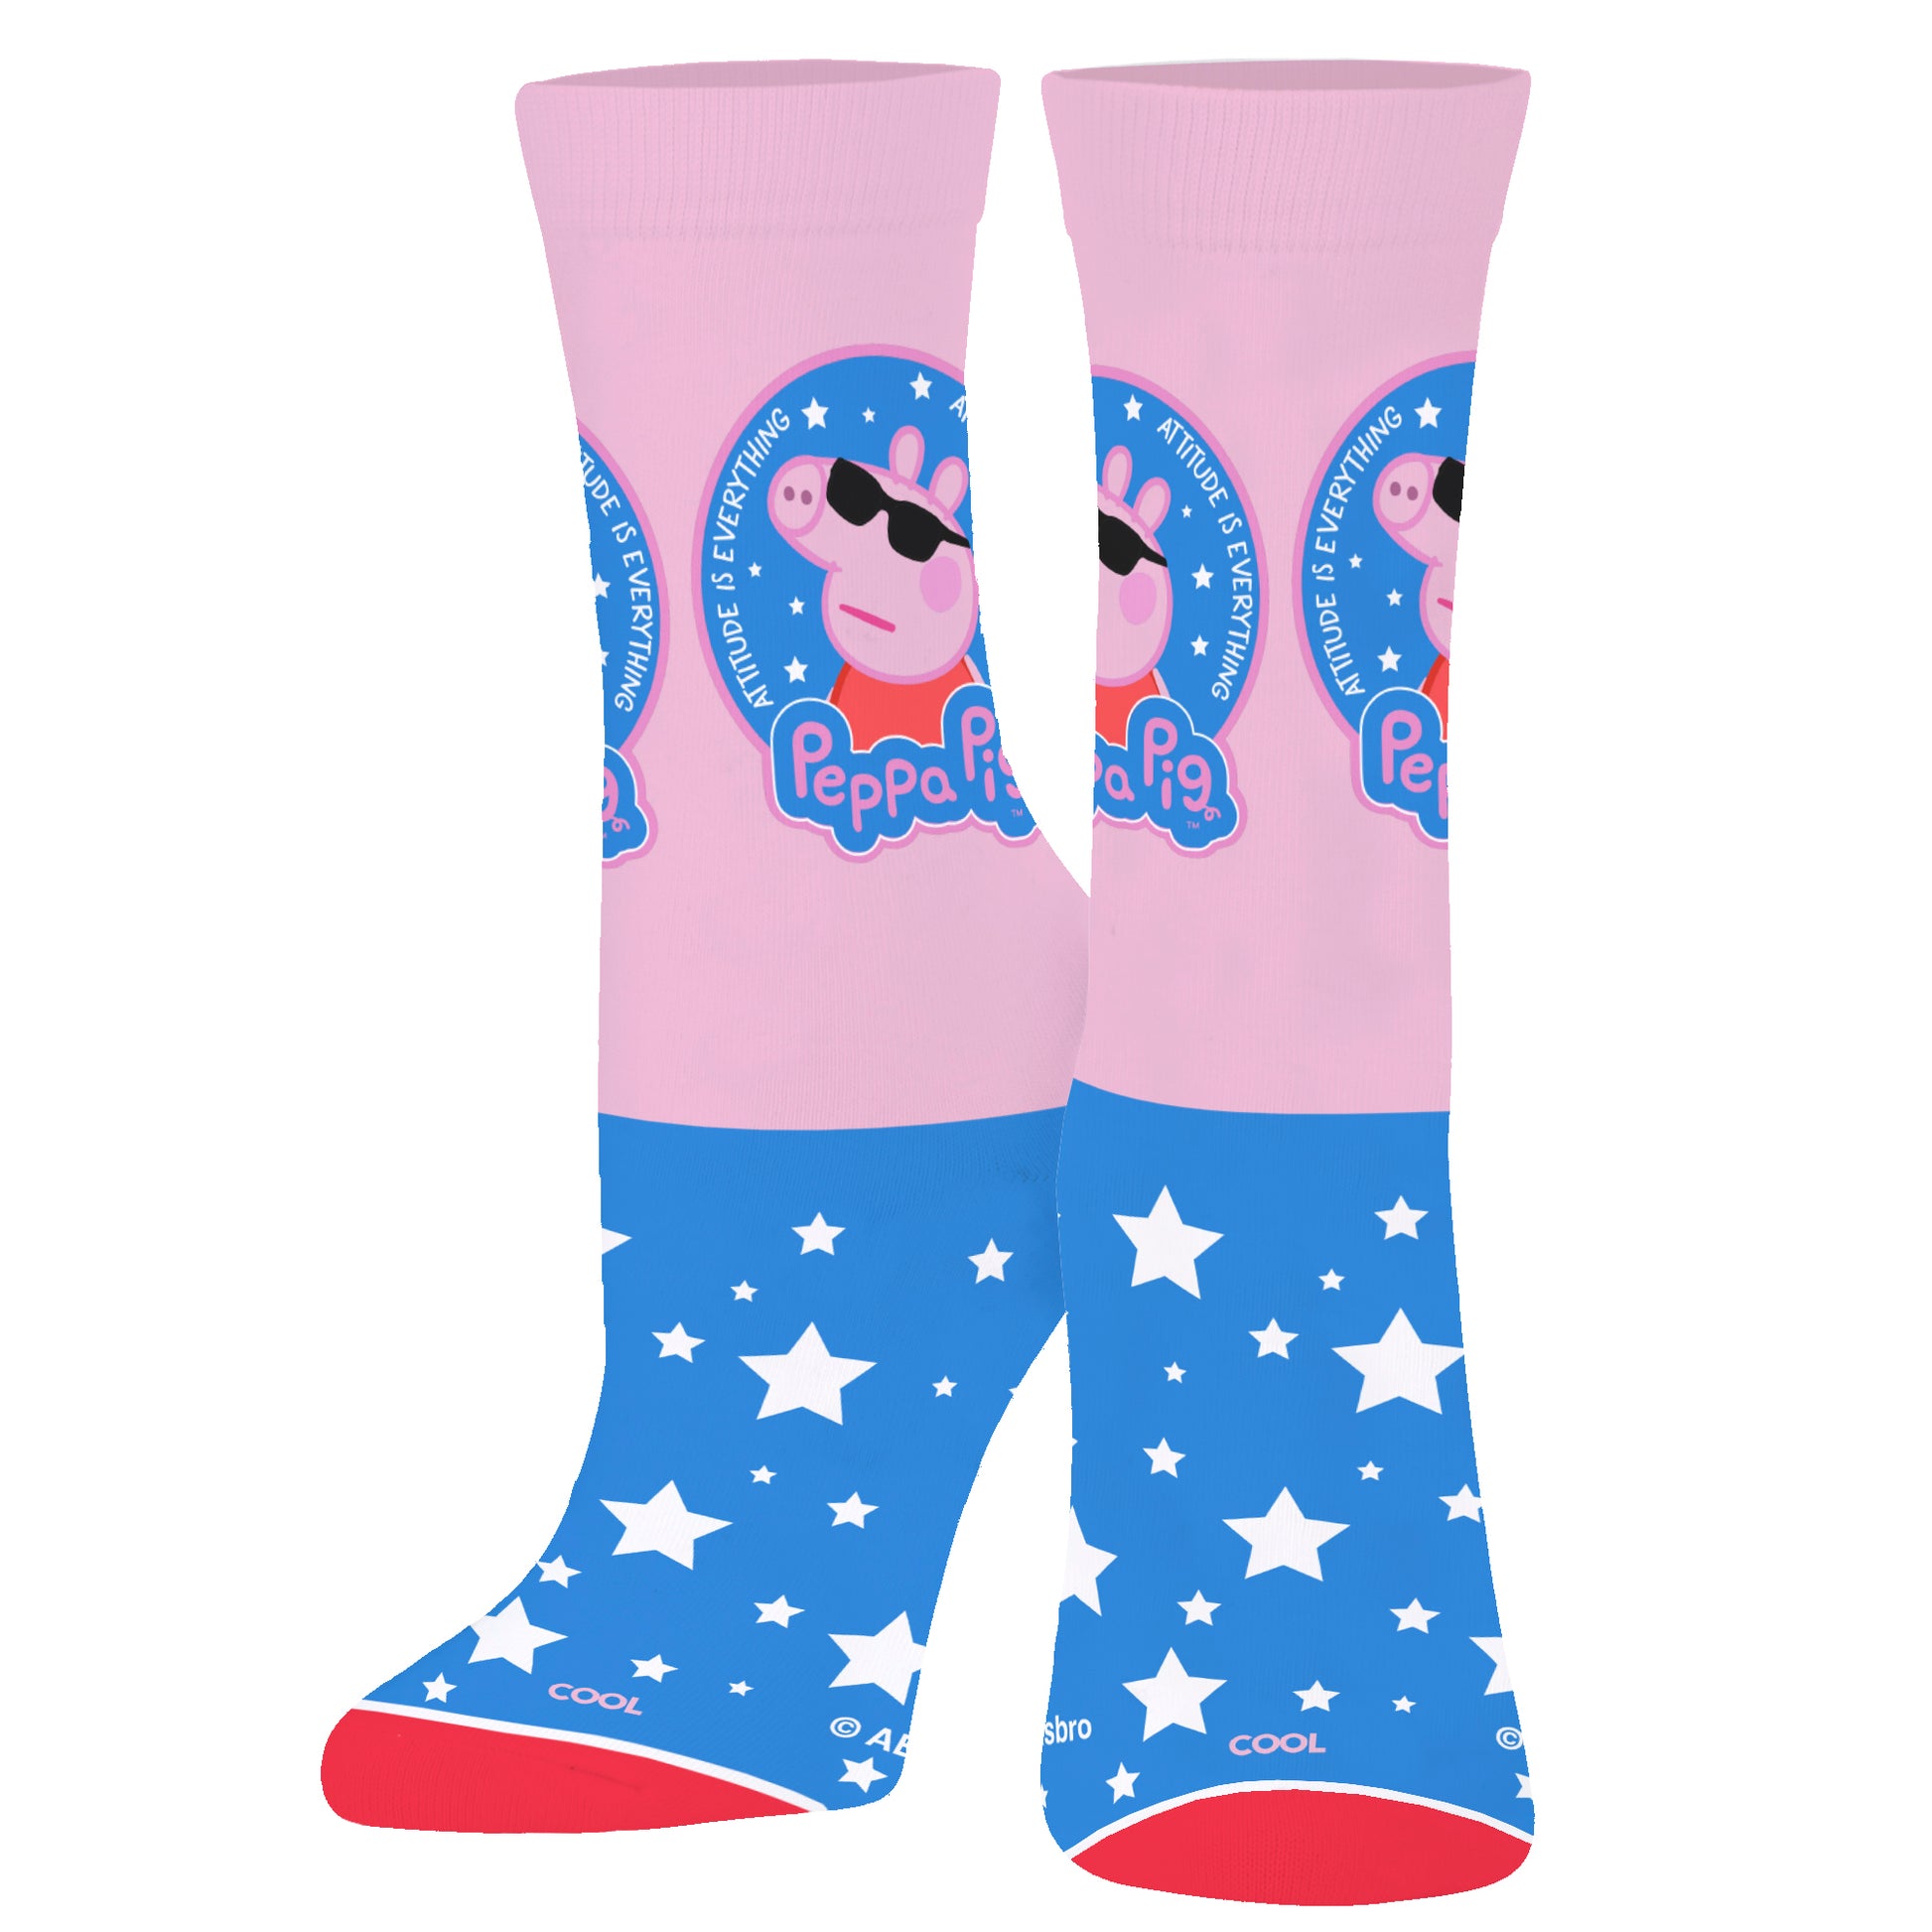 Peppa Pig Attitude Women's Socks